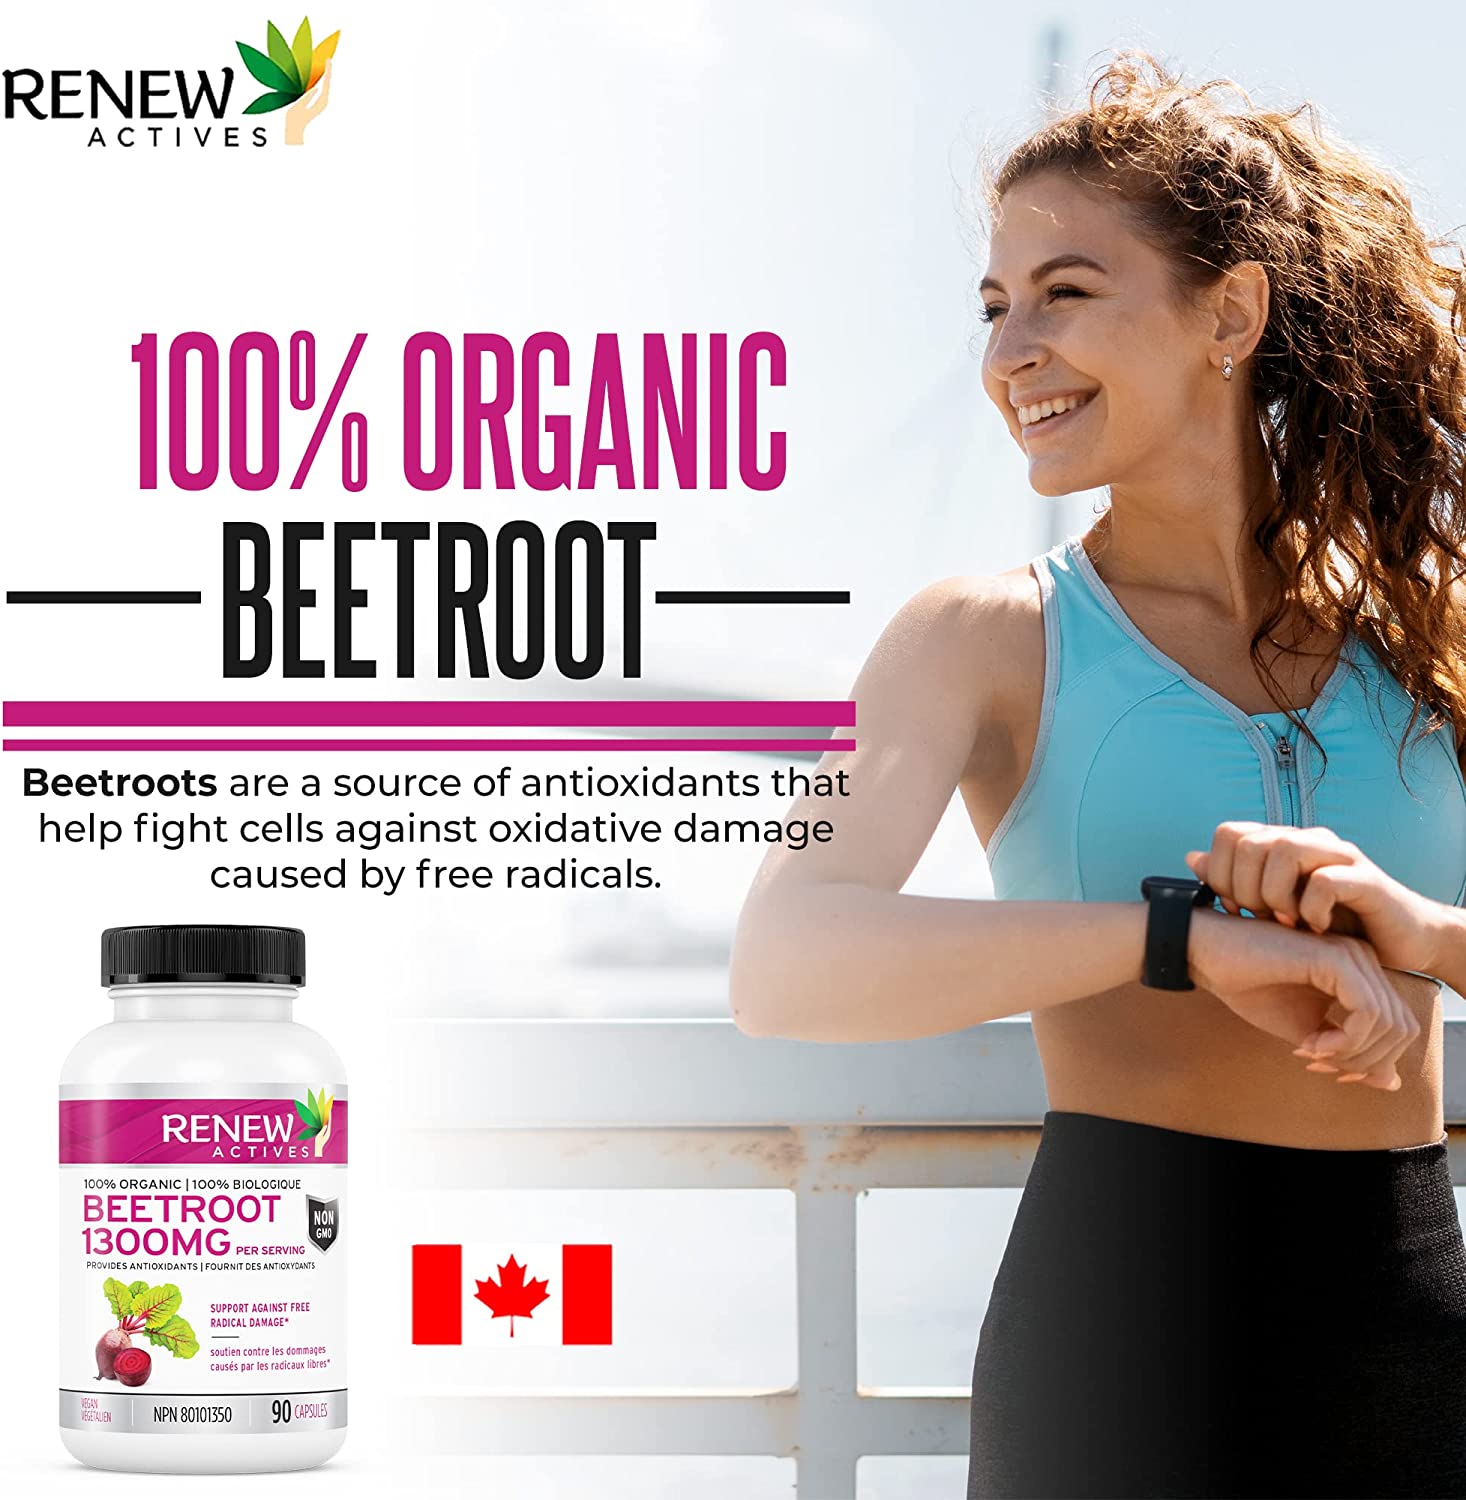 Renew Actives Organic Beetroot Supplement 1300mg